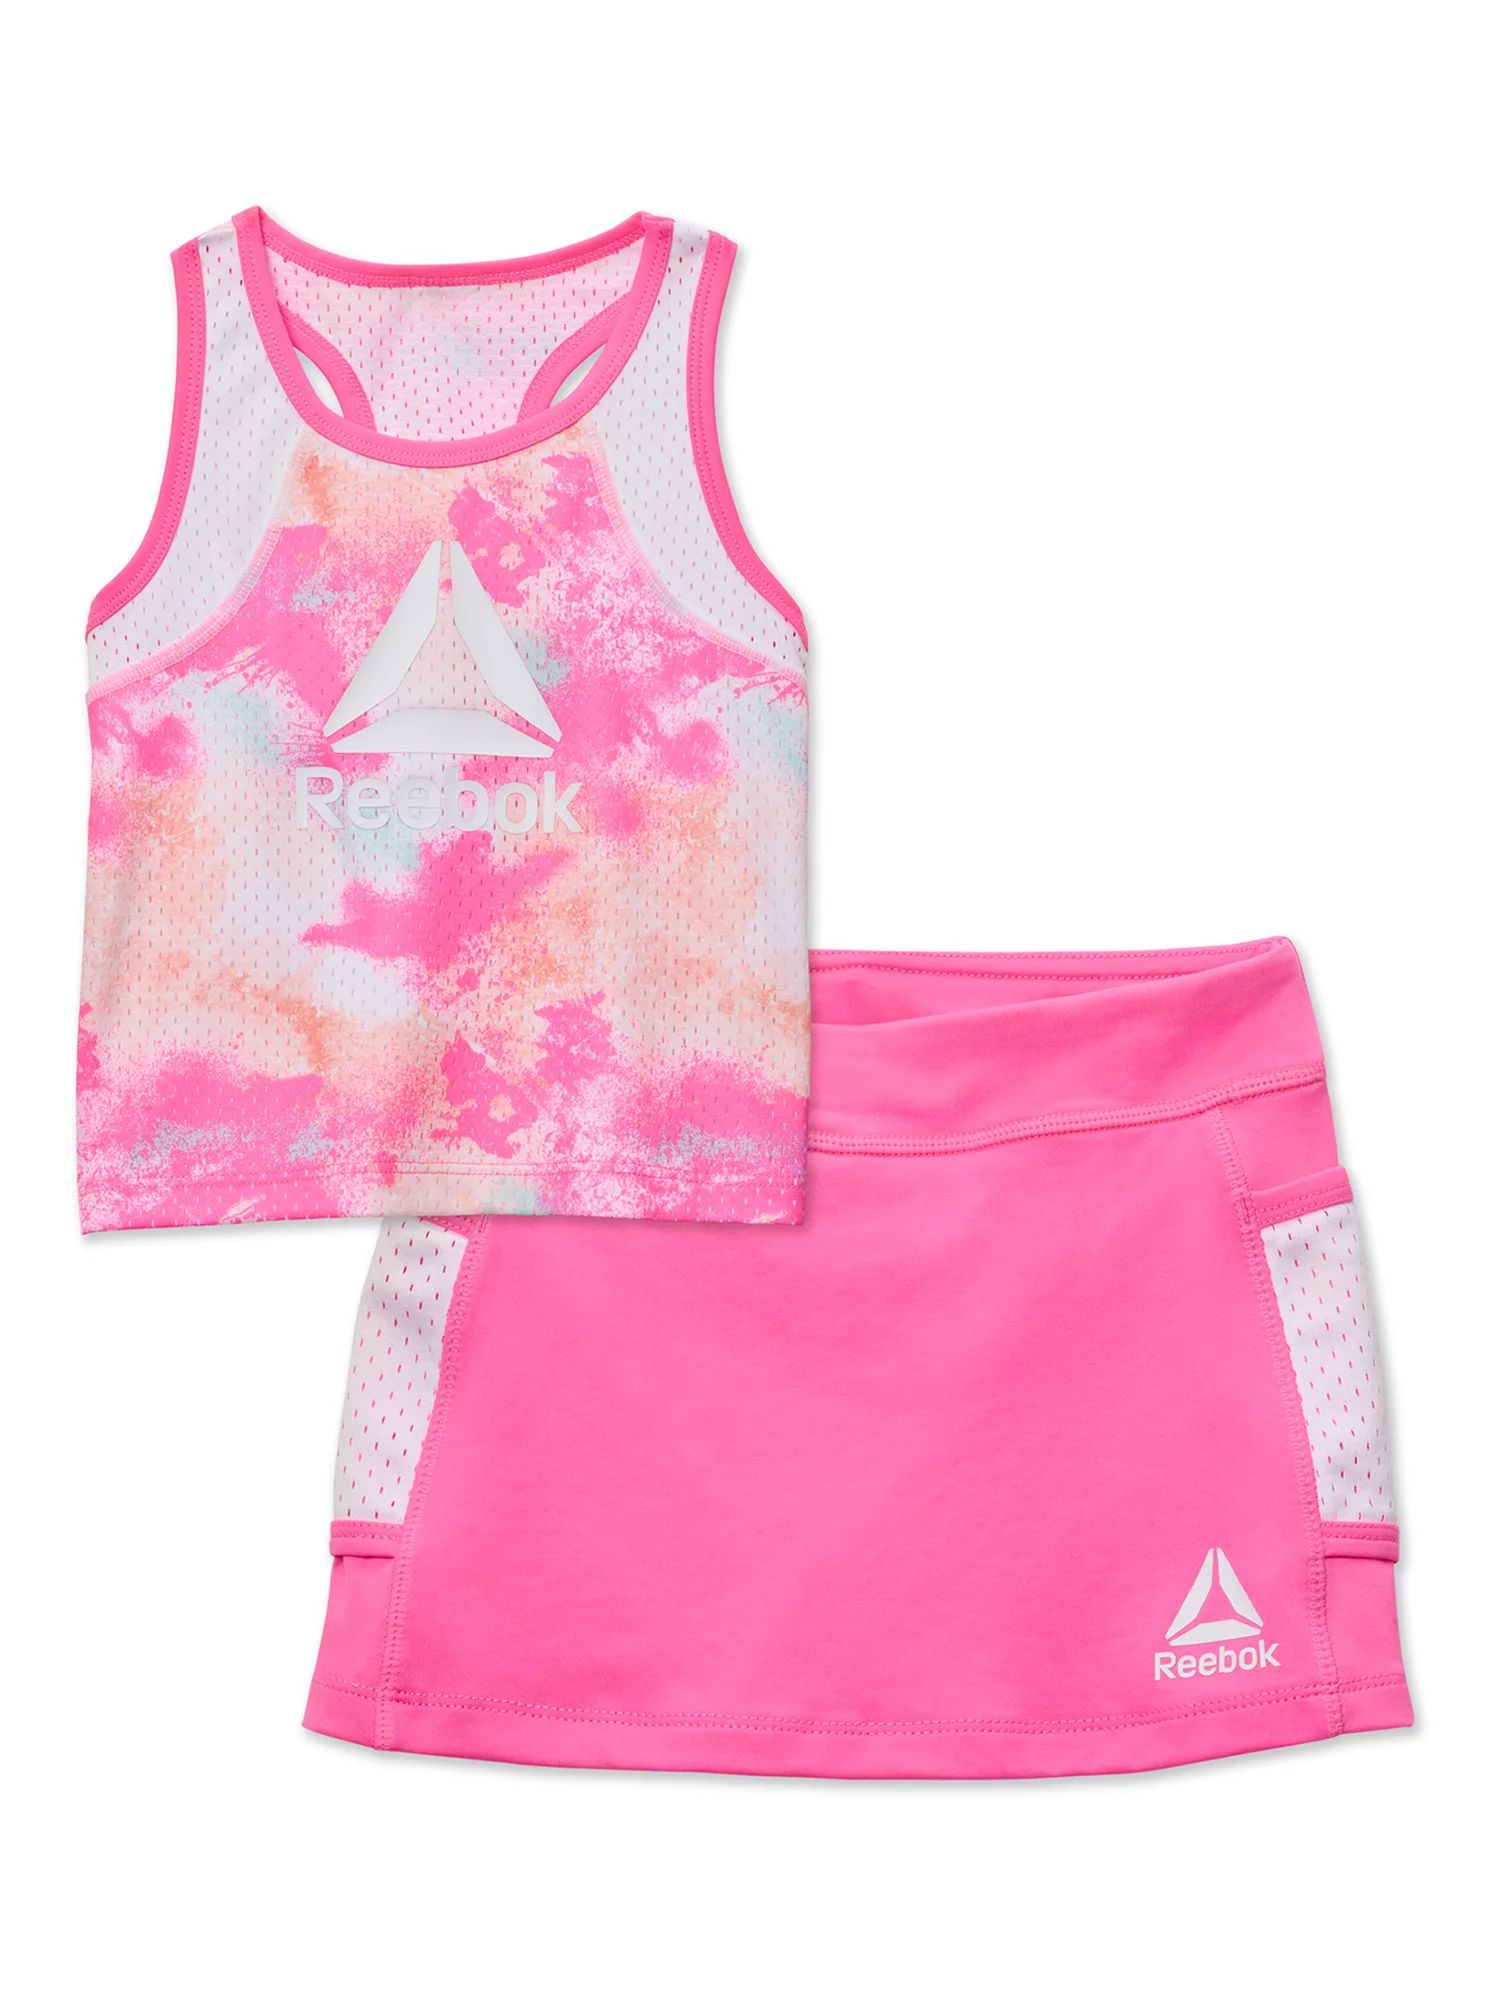 Reebok Baby and Toddler Girl Splatter Print Tank and Tennis Skort, 2 Piece Outfit Set, 12 Months-... | Walmart (US)